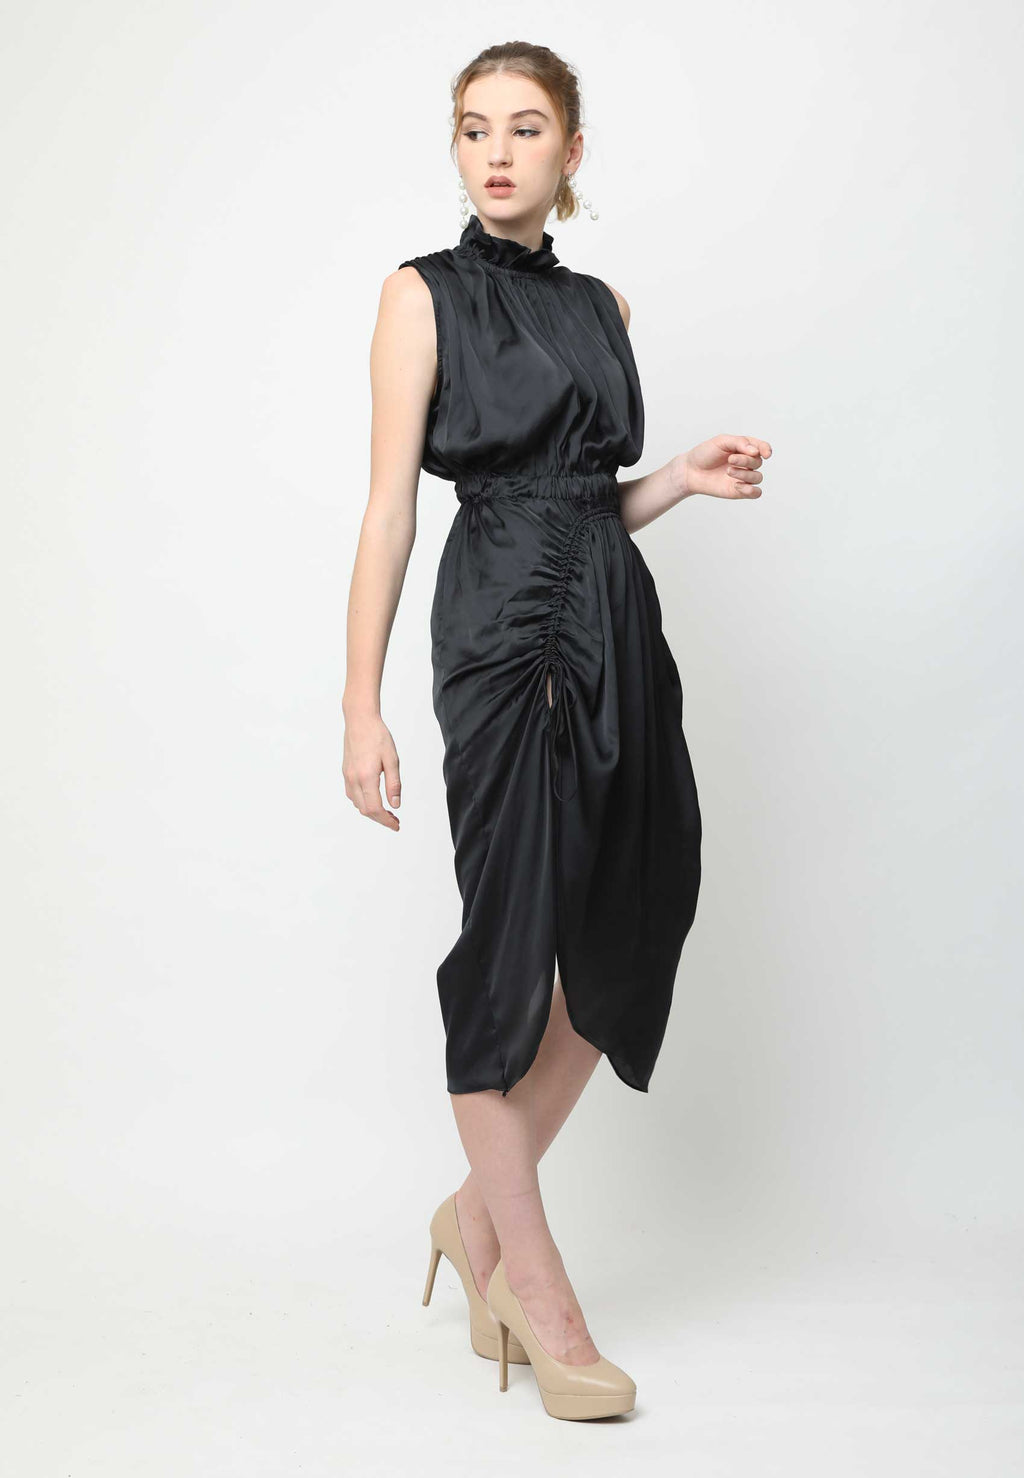 Ava. Arched Dress - Black